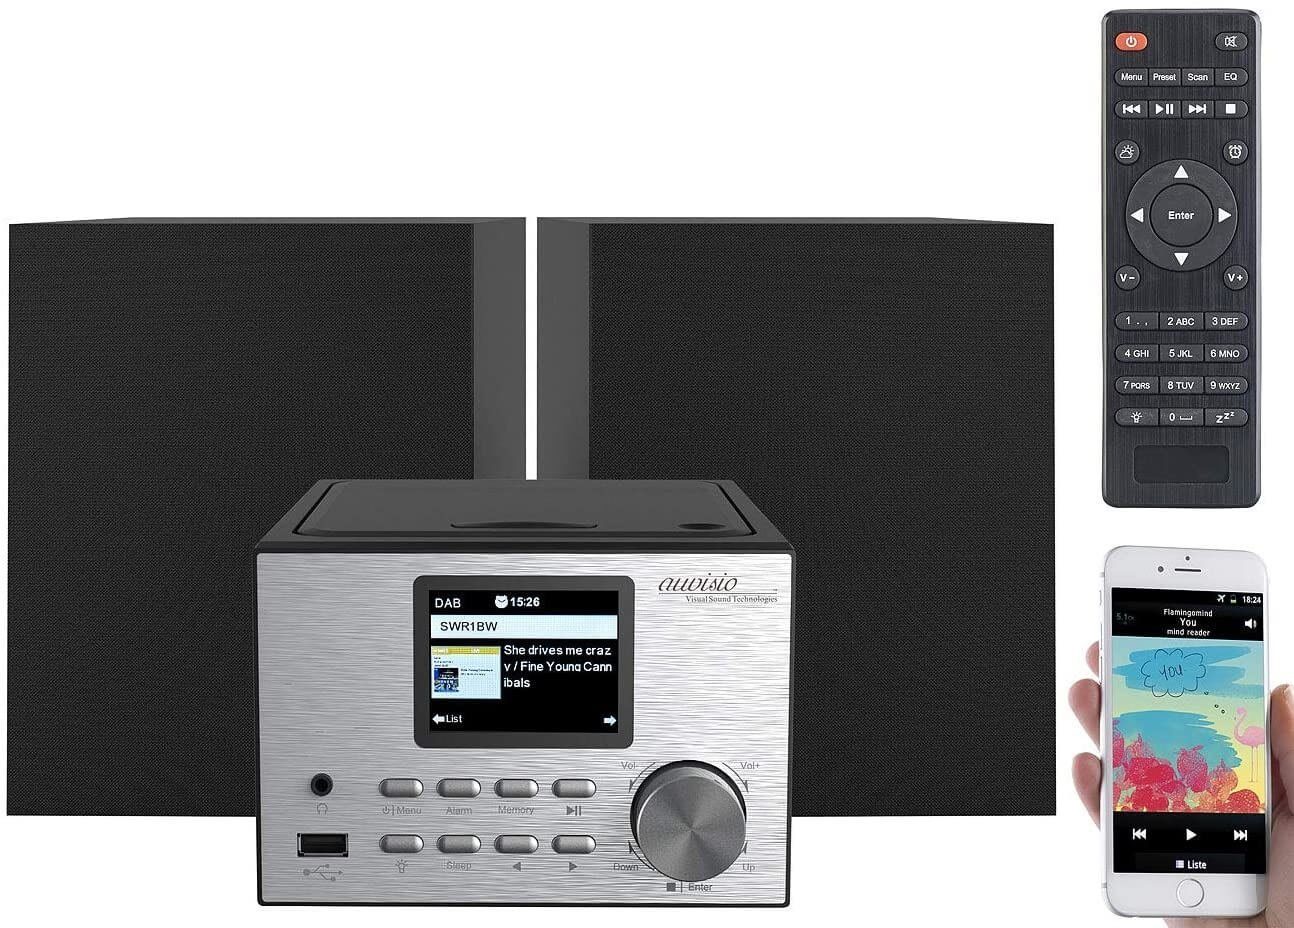 Bluetooth W, 30 CD-Player) FM, USB, System FM, IRS-500.mini 2.1 FM/DAB+, (DAB), Webradio, mit auvisio Stereoanlage CD, Micro-Stereoanlage (Digitalradio DAB+, mit